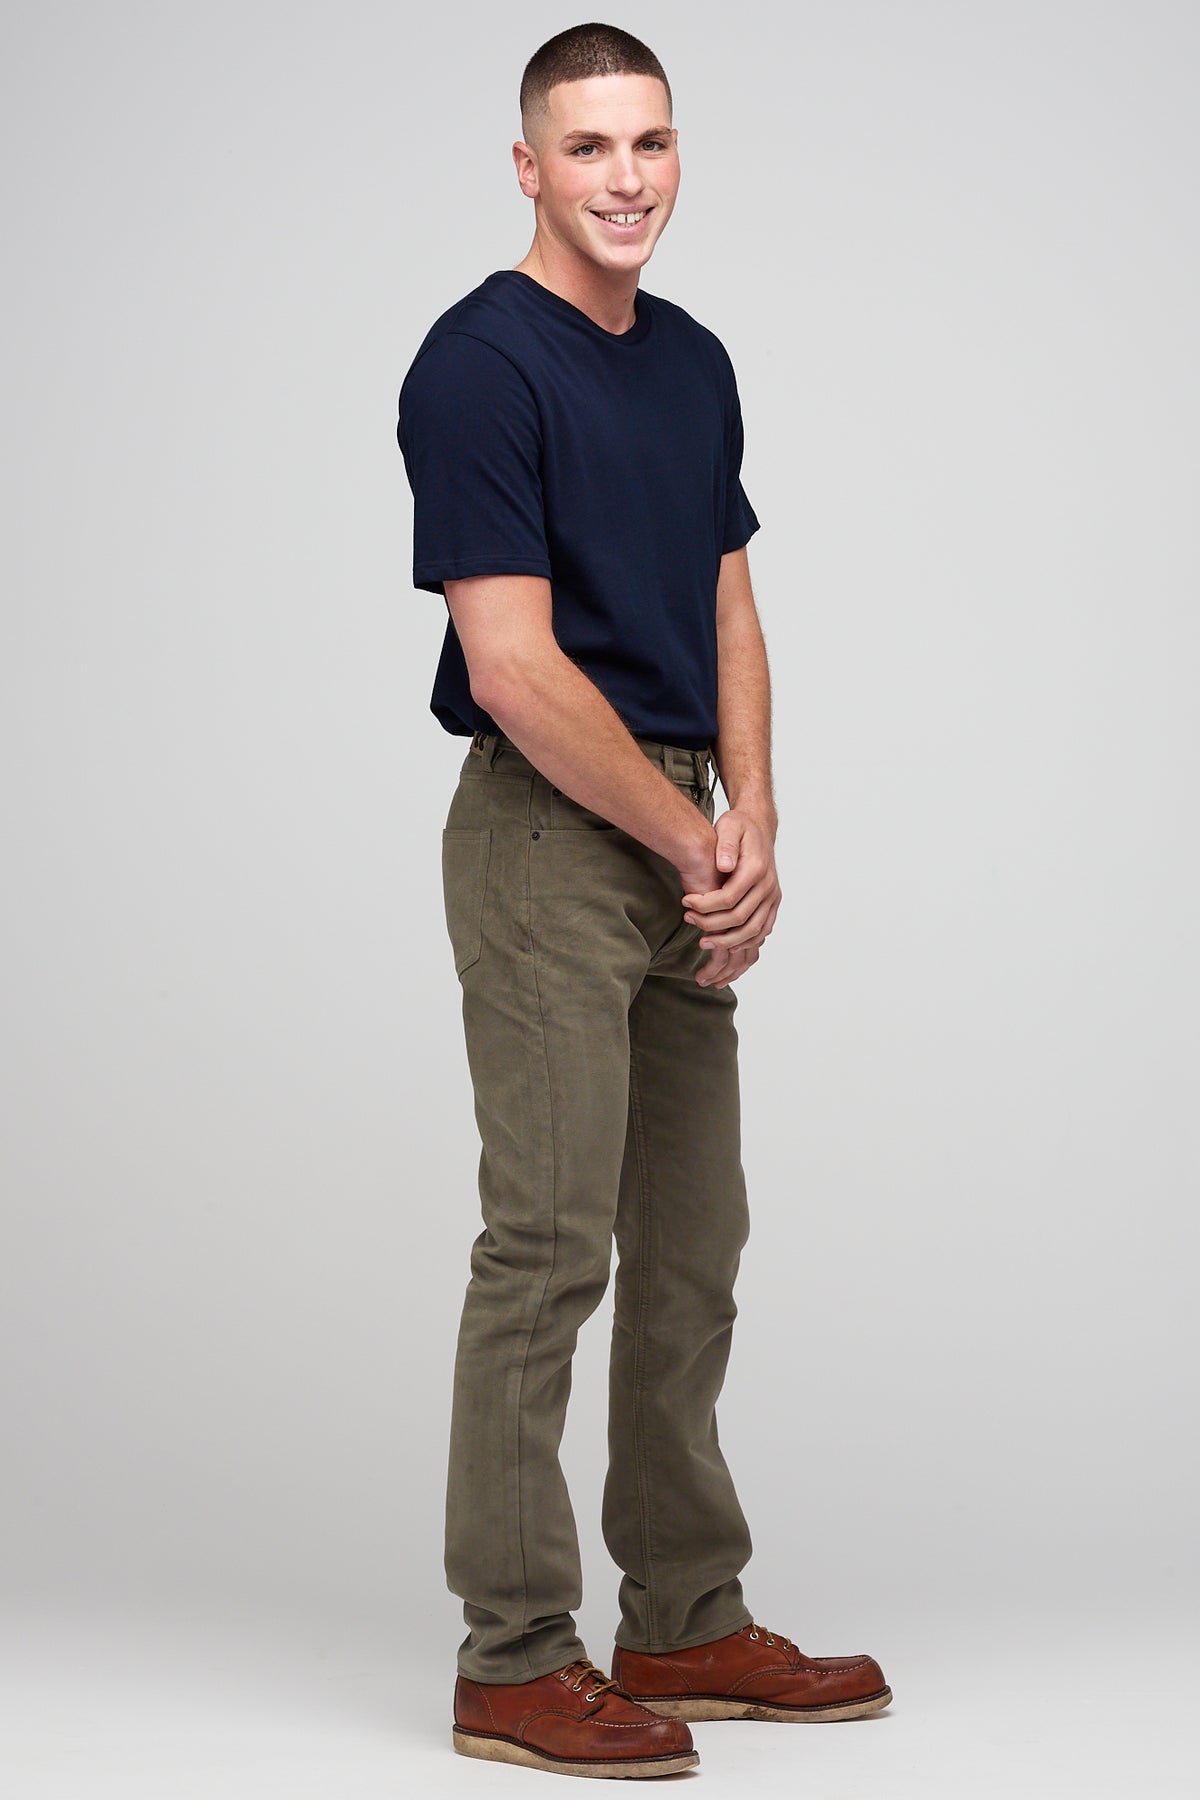 
            Brunette male in Olive Five Pocket Moleskin Jean styled with navy men&#39;s short sleeve t-shirt